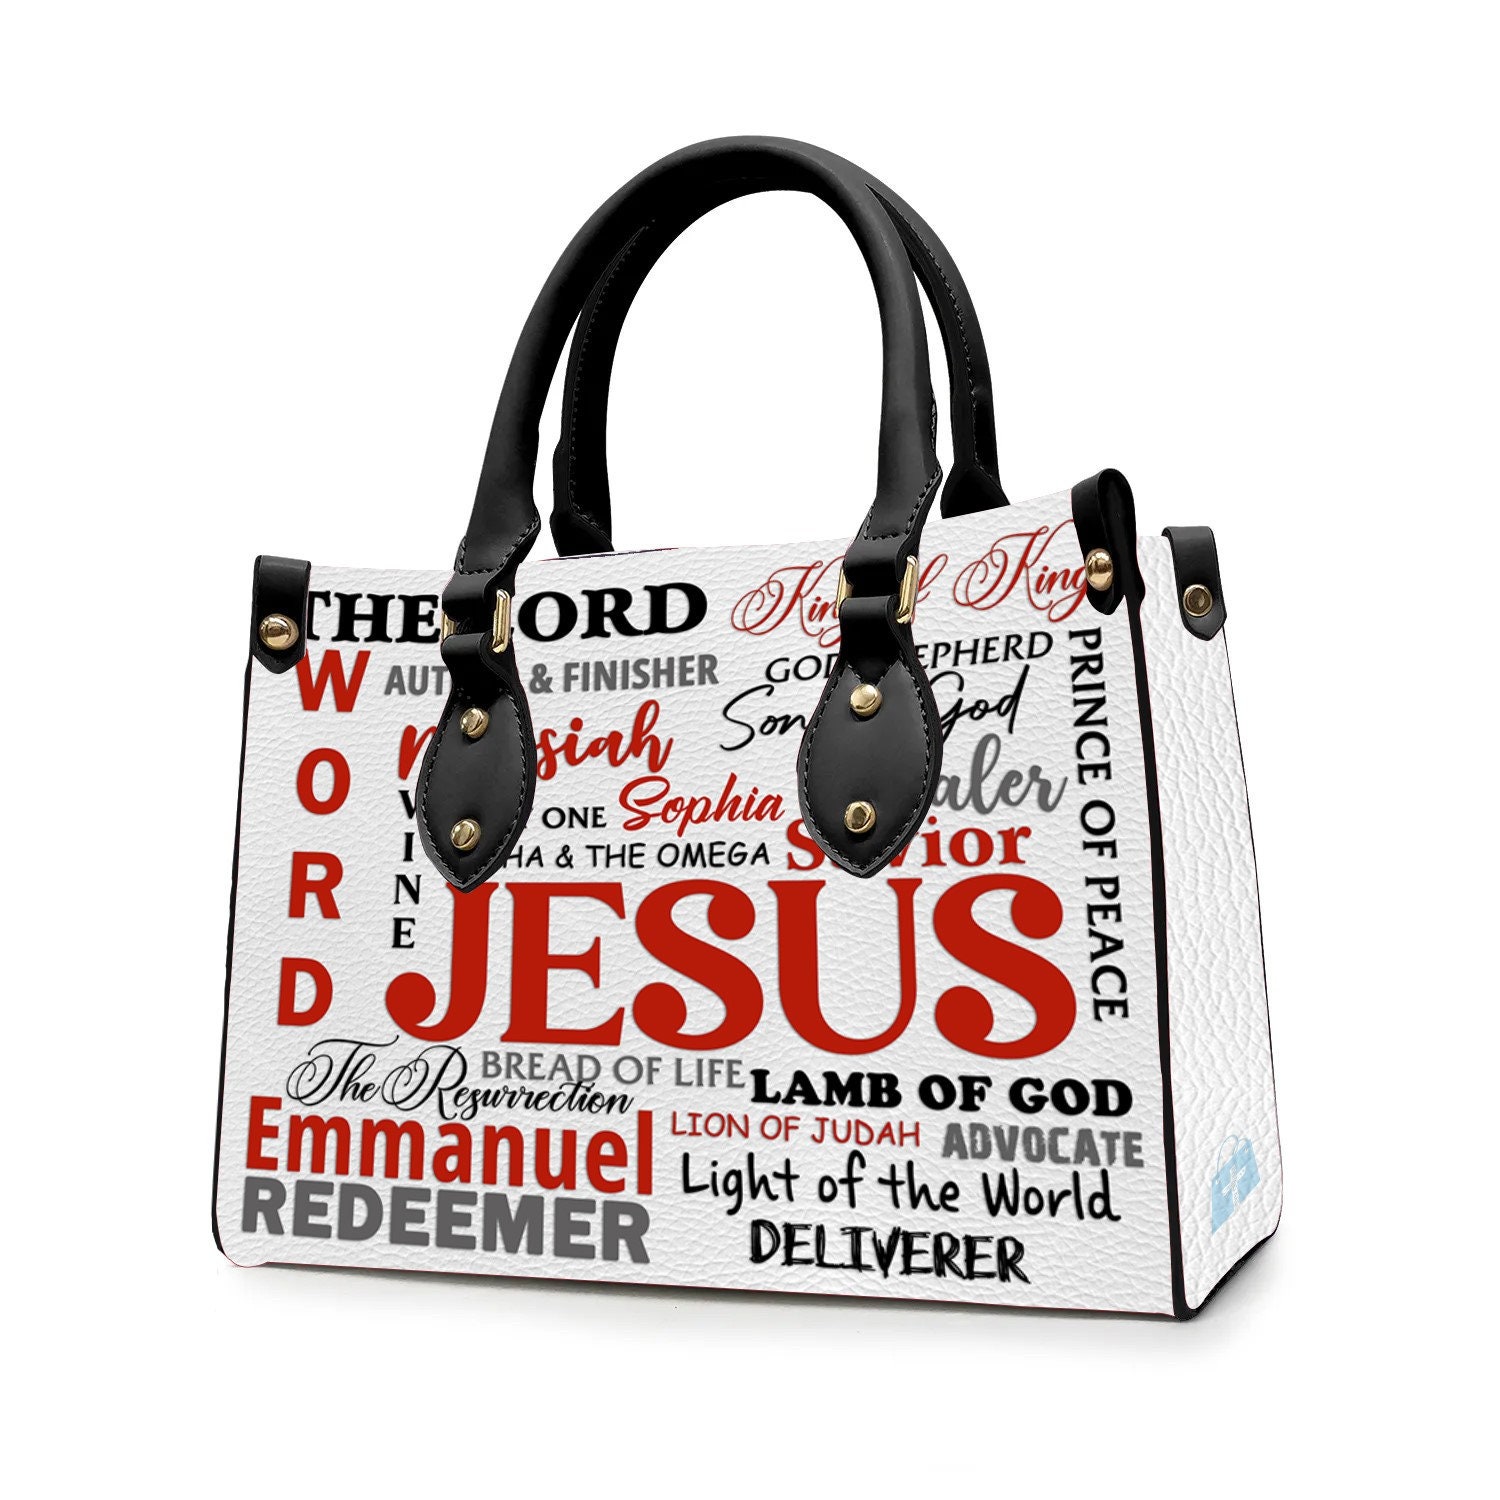 Jesus The Lord King Of King Leather Handbag,  Leather Handbag, Gifts for Women